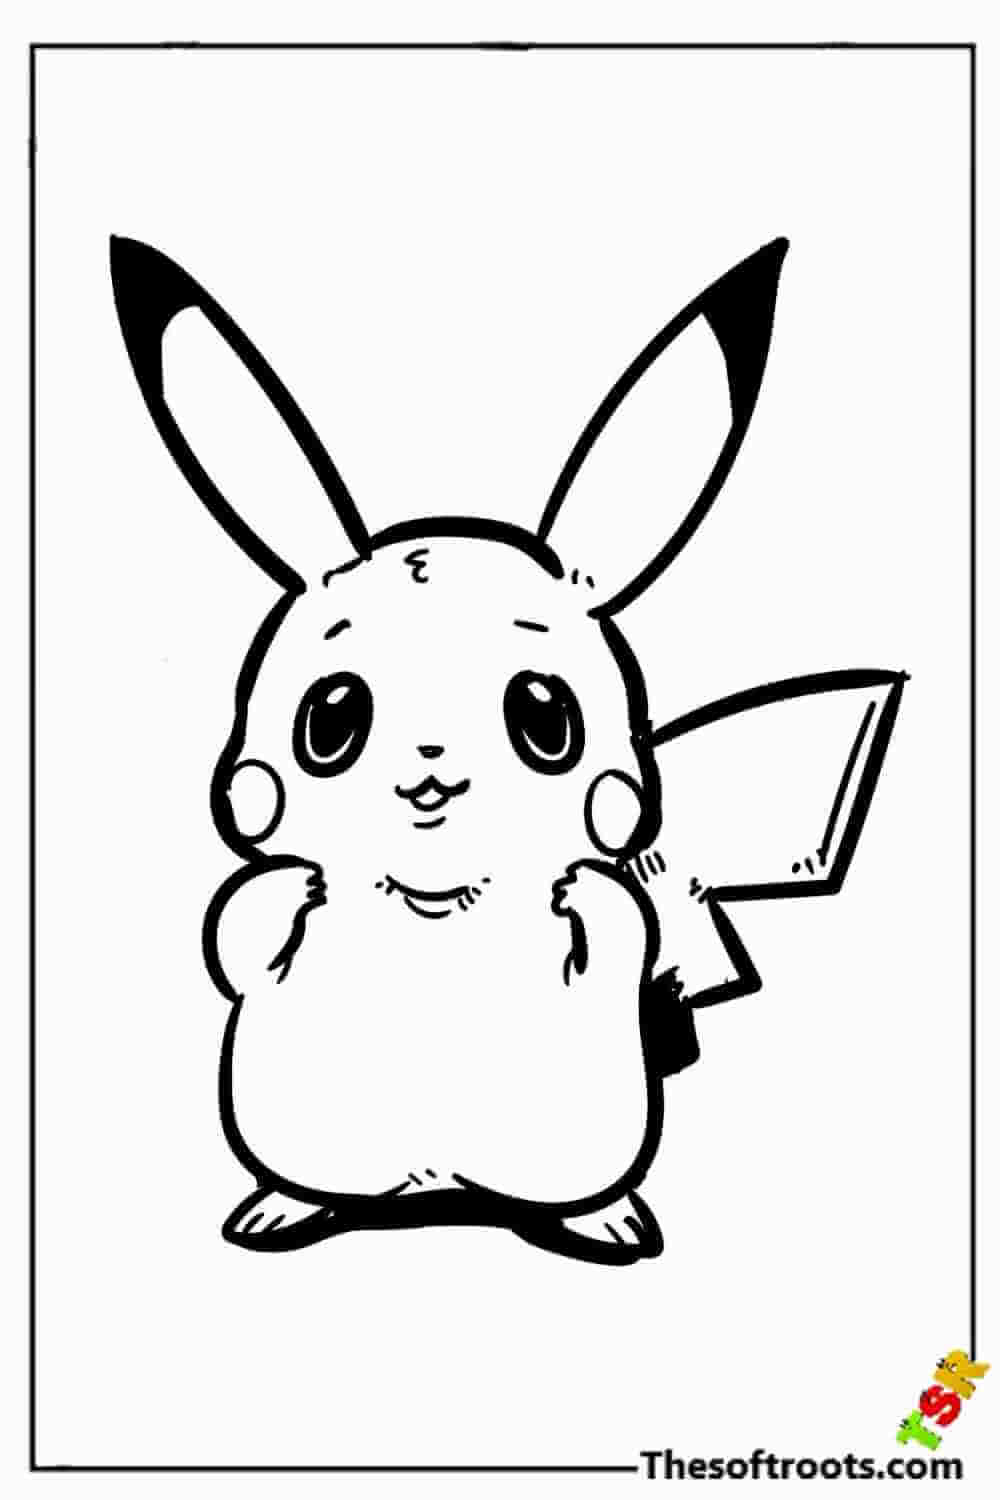 Adorable Pikachu coloring pages